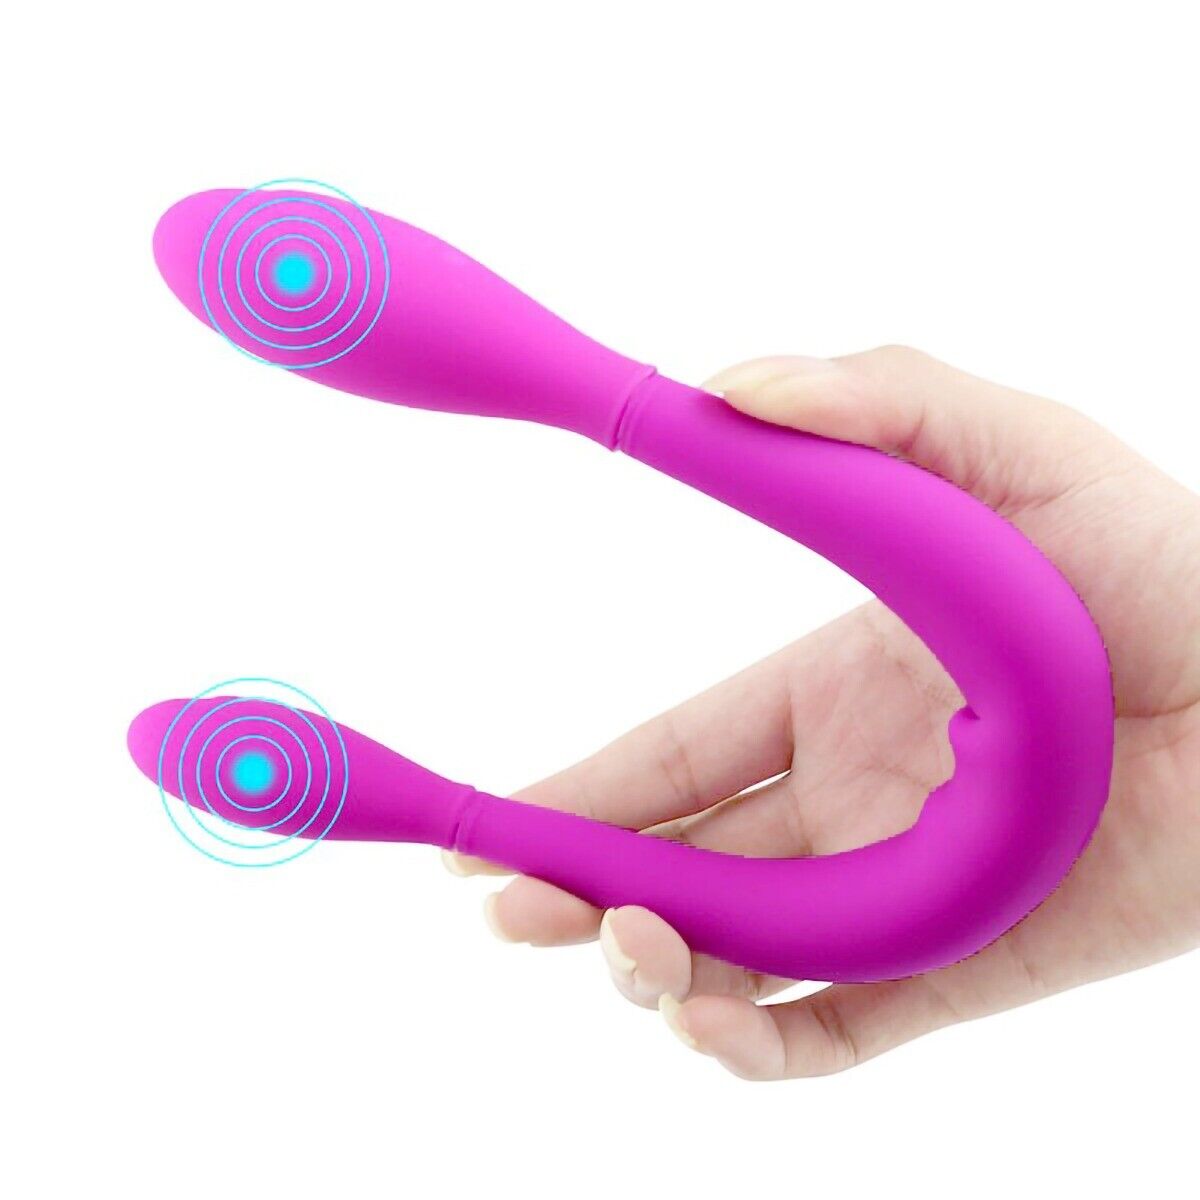 Flexible Double Dual Ended G-spot Anal Vibrator Dildo Dong Sex-toys for Women